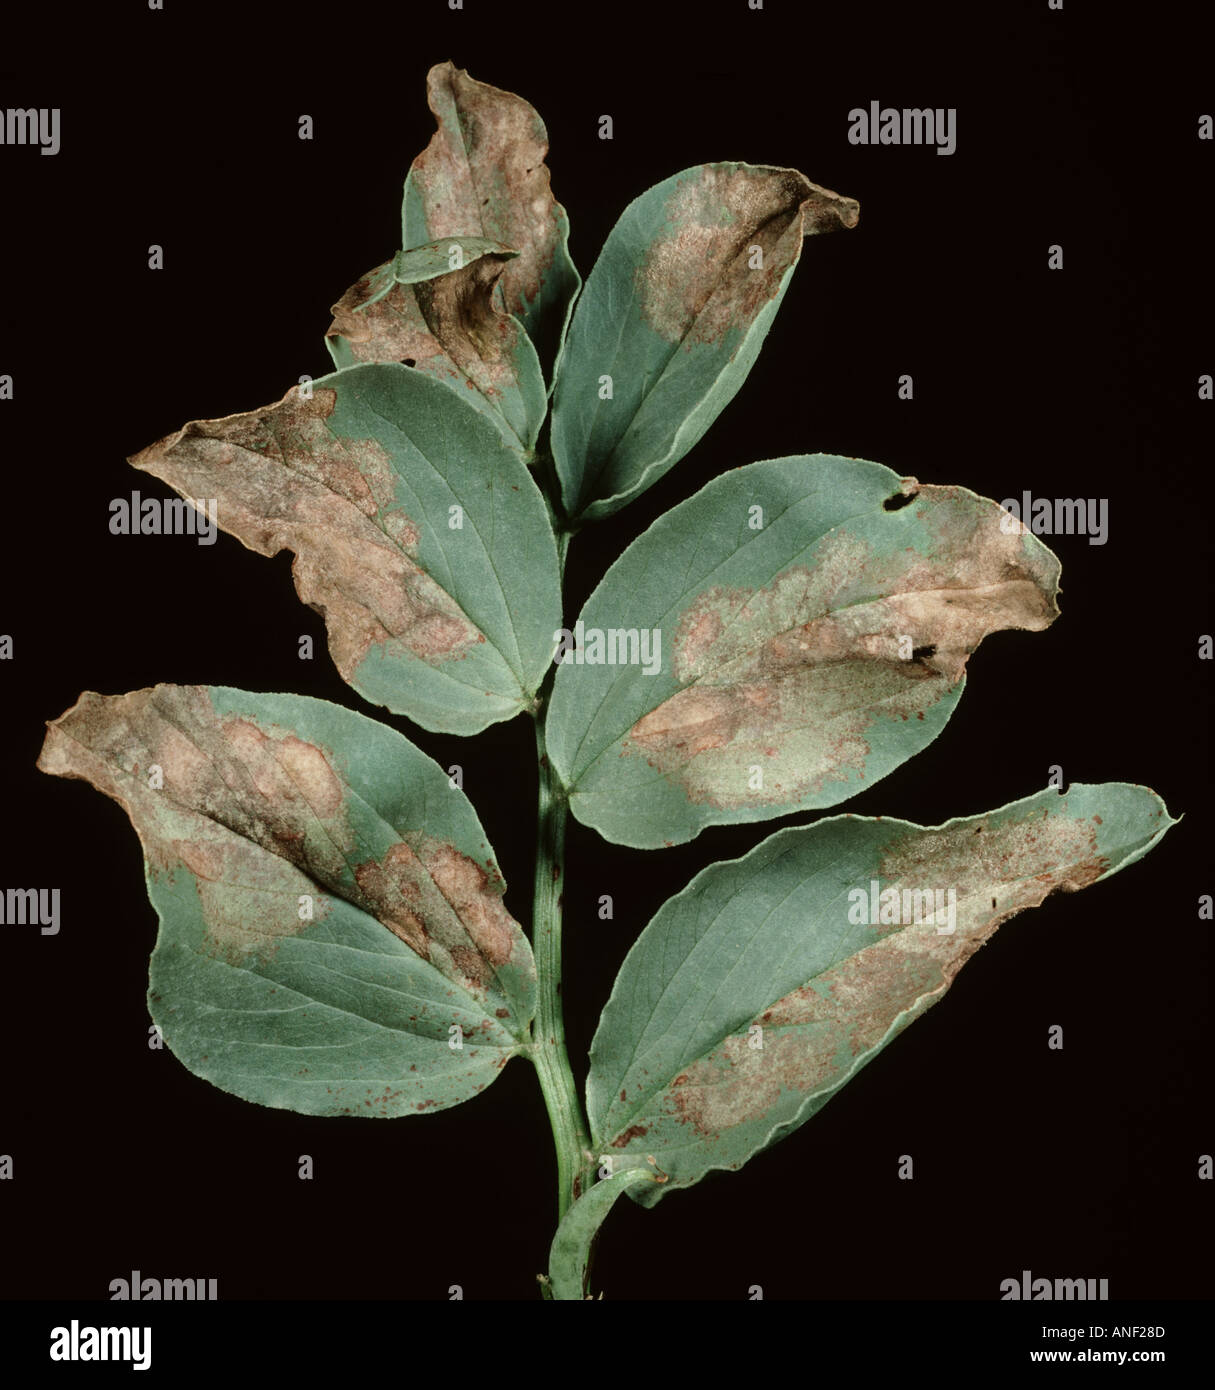 Downy mildew Peronospora viciae mycelium and necrotic lesions on field or broad bean Vicia fabae leaf Stock Photo